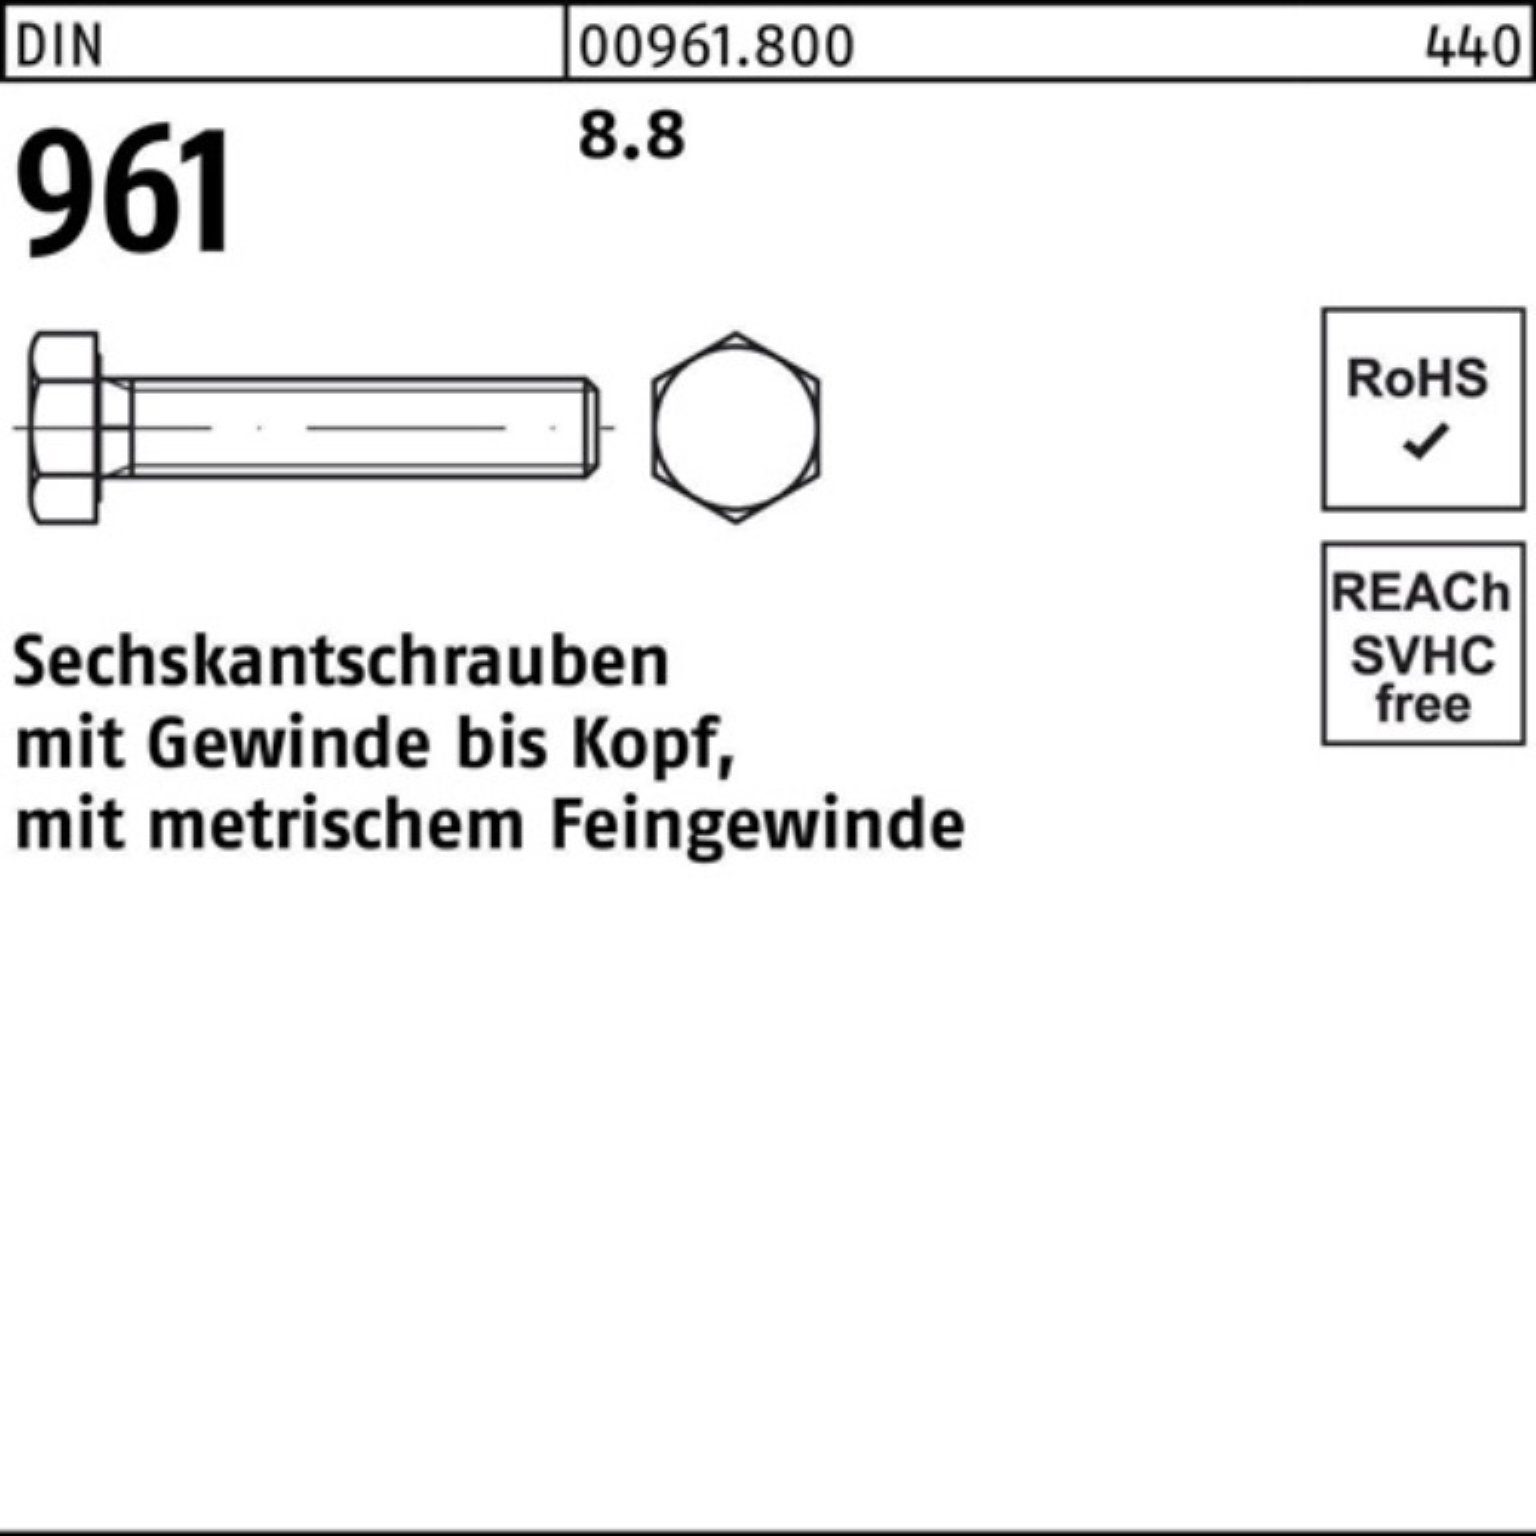 Sechskantschraube Reyher 30 VG M10x1,25x DI 200 DIN 200er 961 8.8 Stück Pack Sechskantschraube